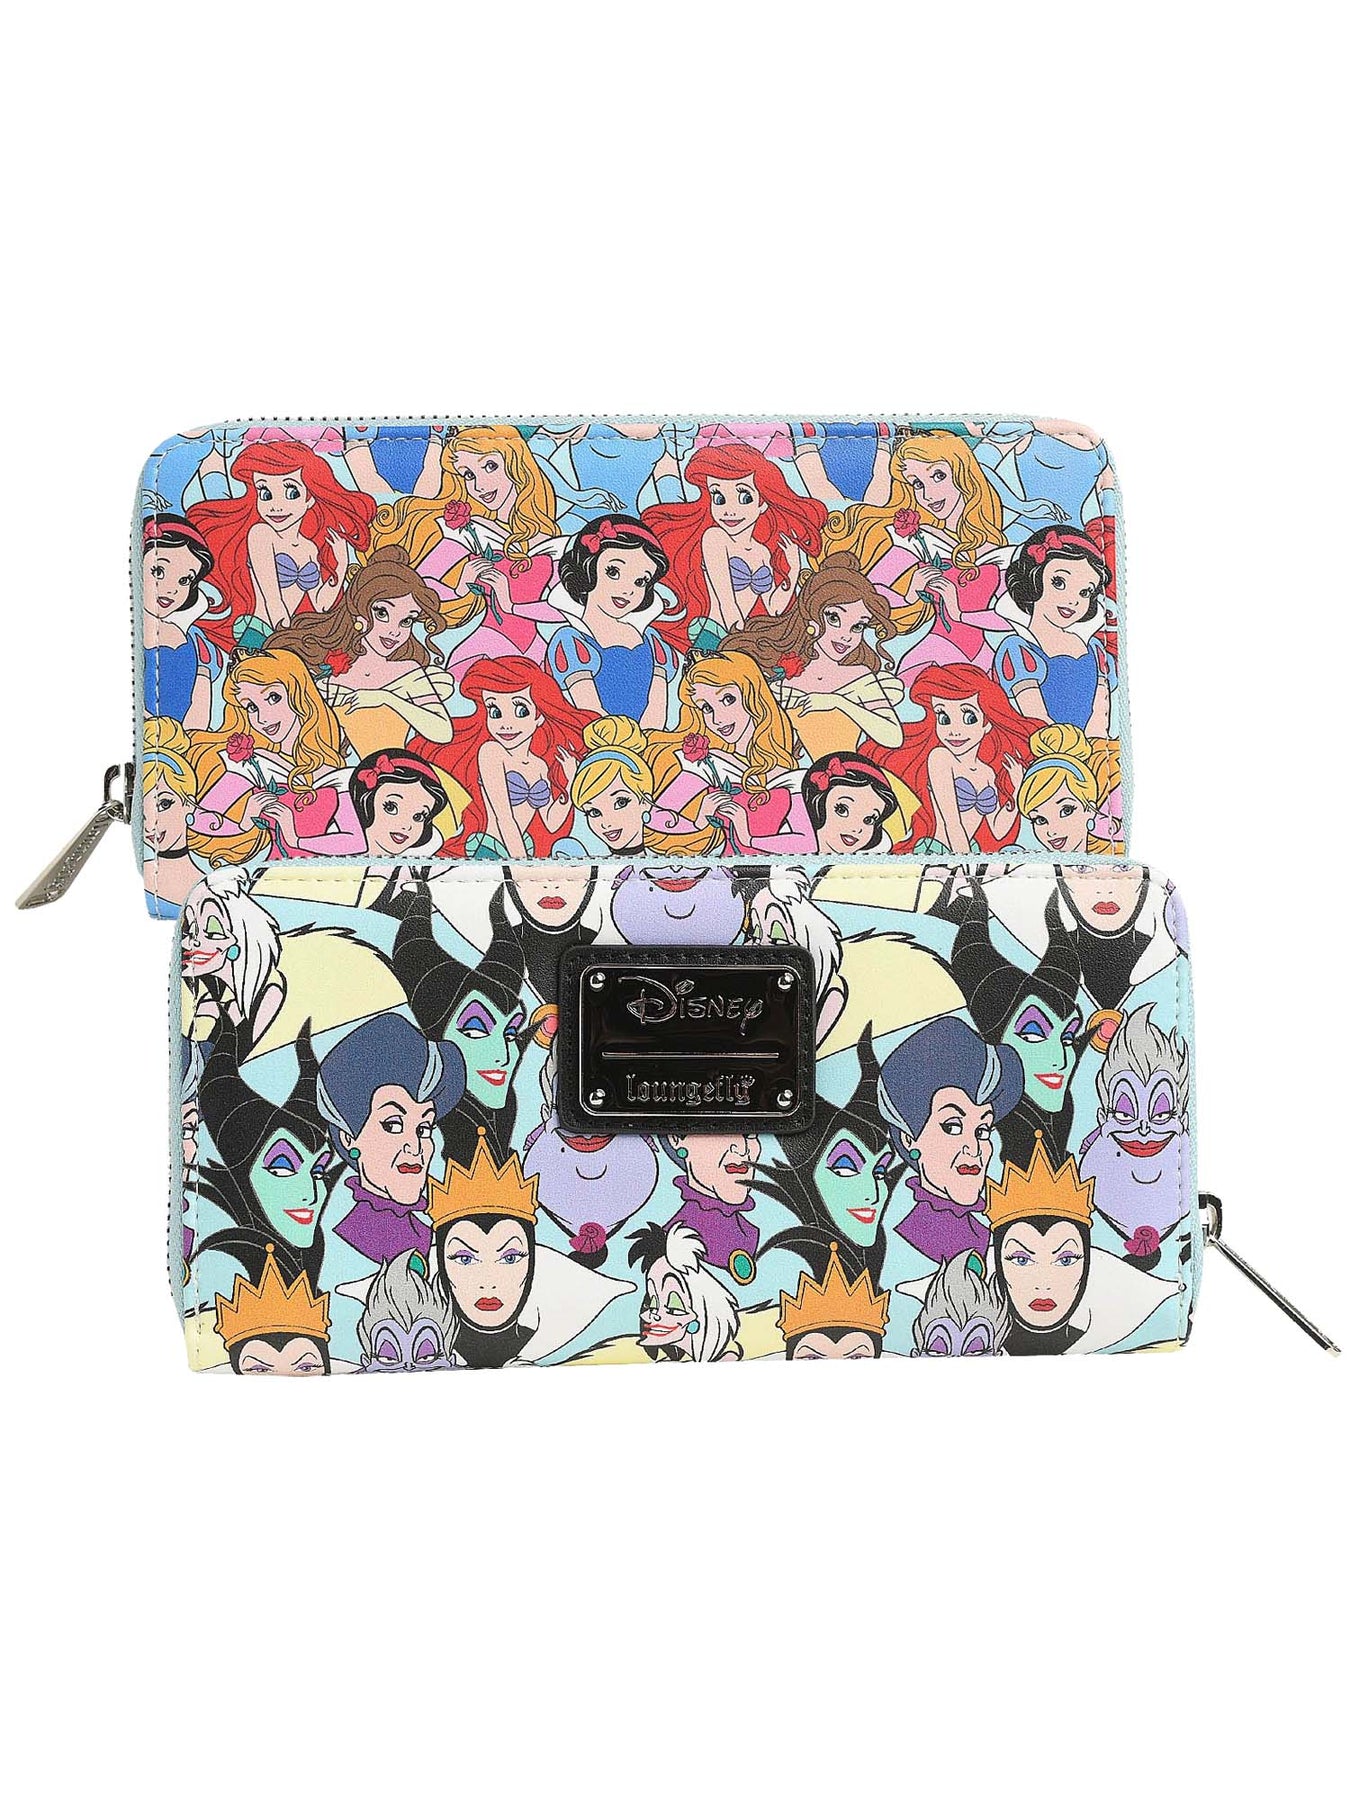 Disney snow white loungefly purse (small scuff on... - Depop